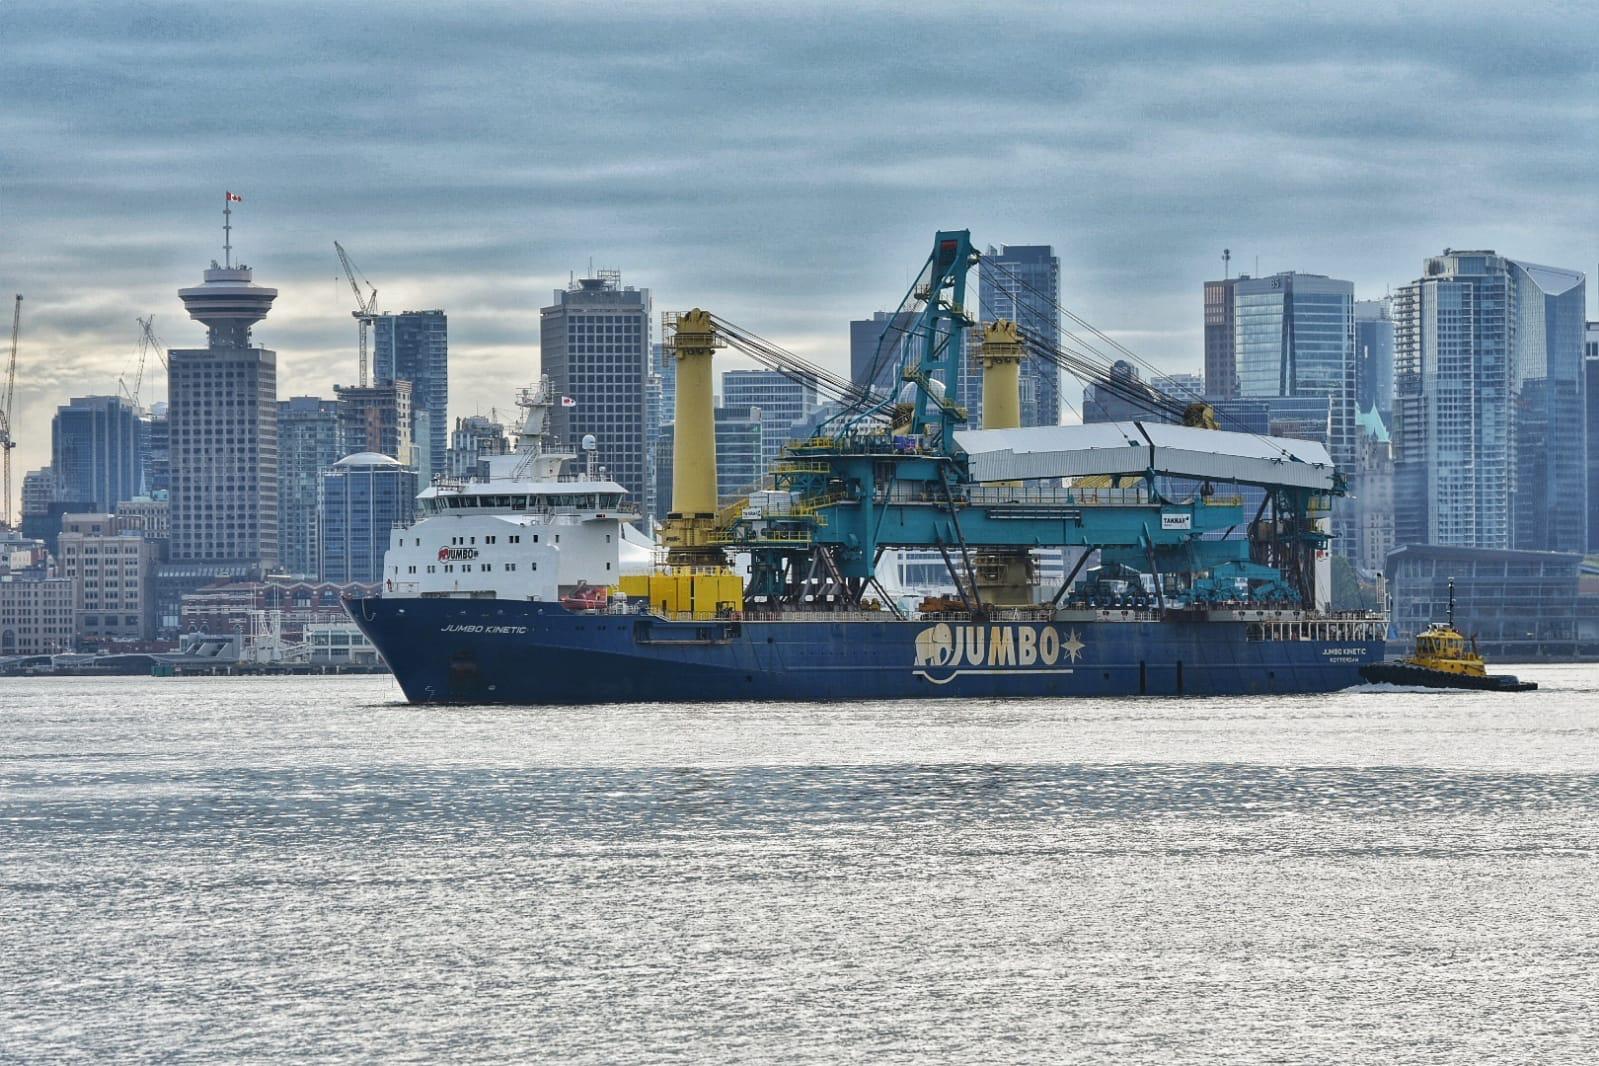 Shiploader arrives in Vancouver. Photo, Jumbo